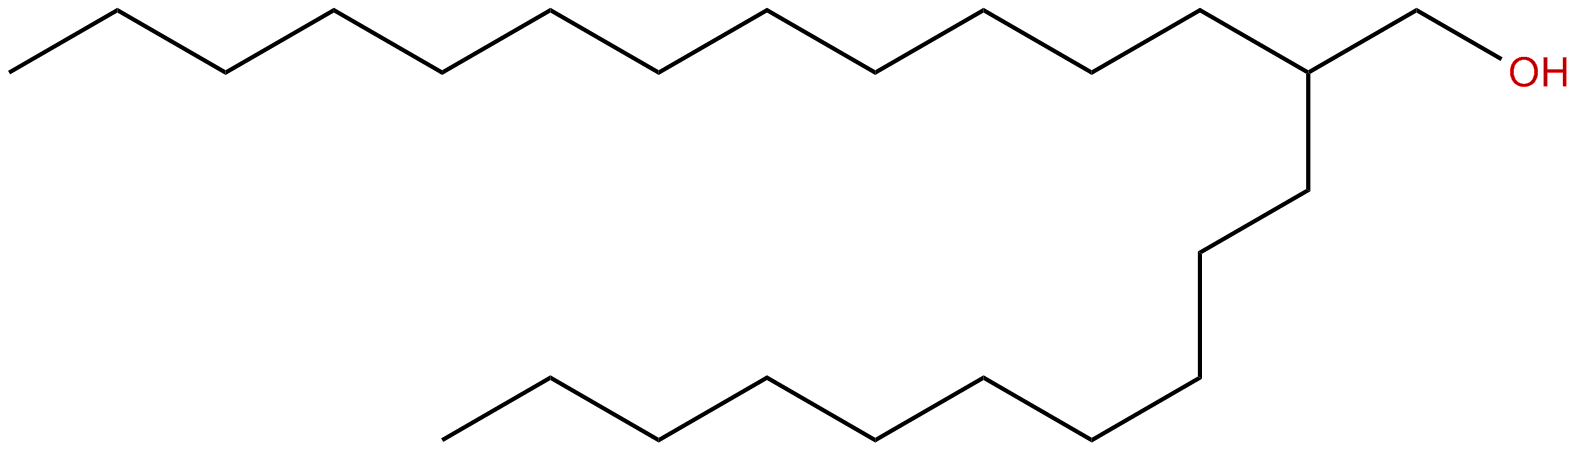 Image of 2-decyl-1-tetradecanol